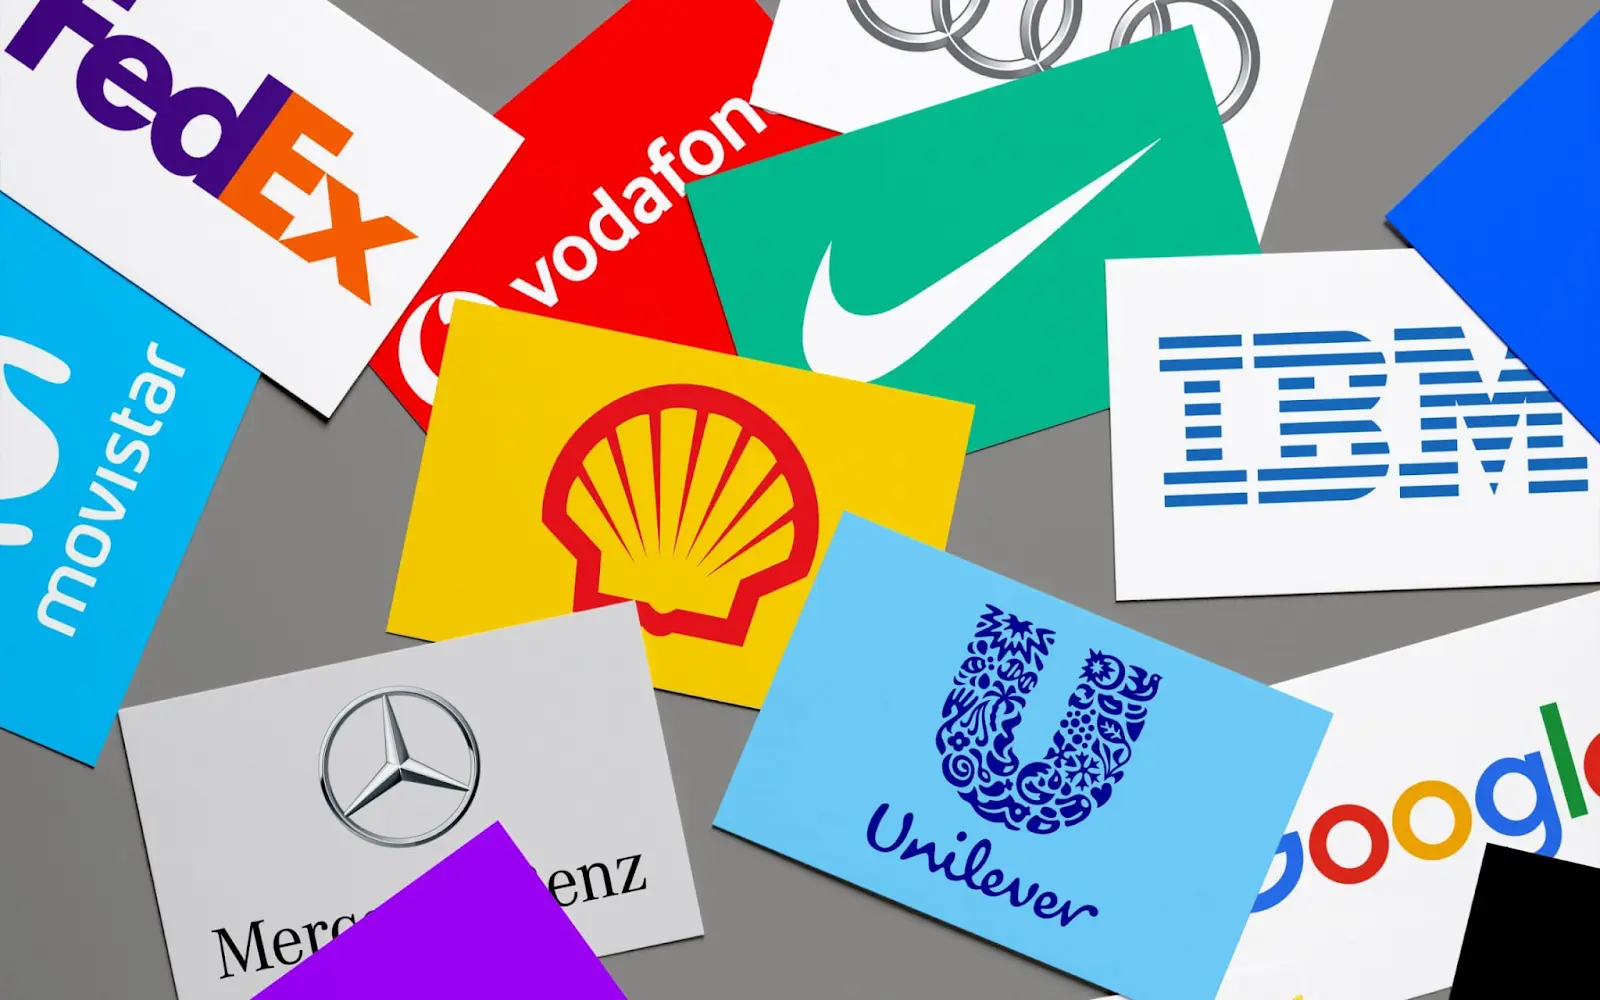 Logos of famous companies such as Shell, Unilever, vodafon, etc